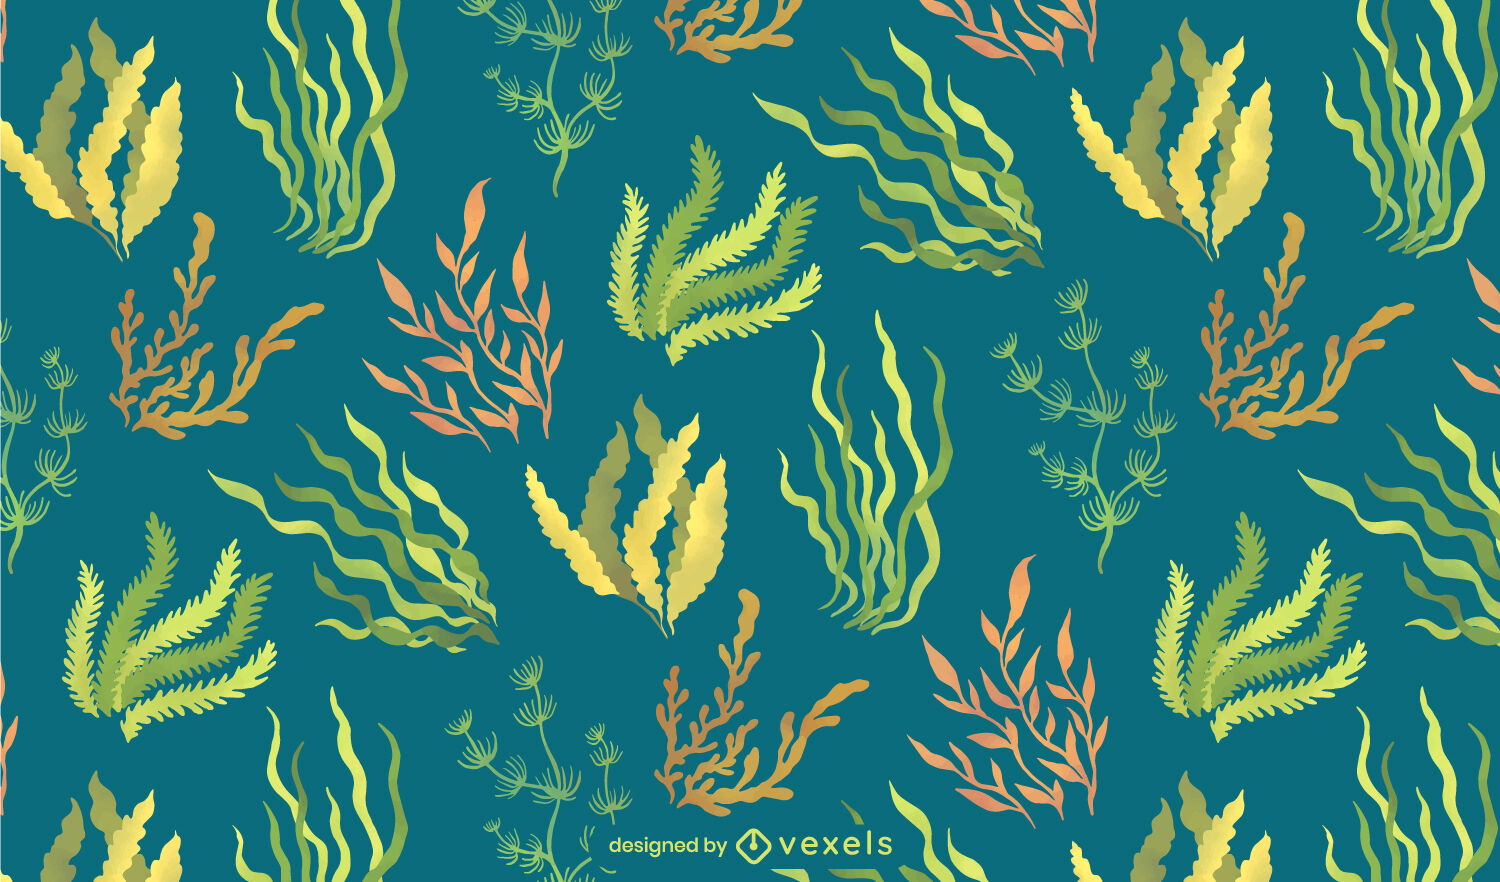 Seaweed pattern design